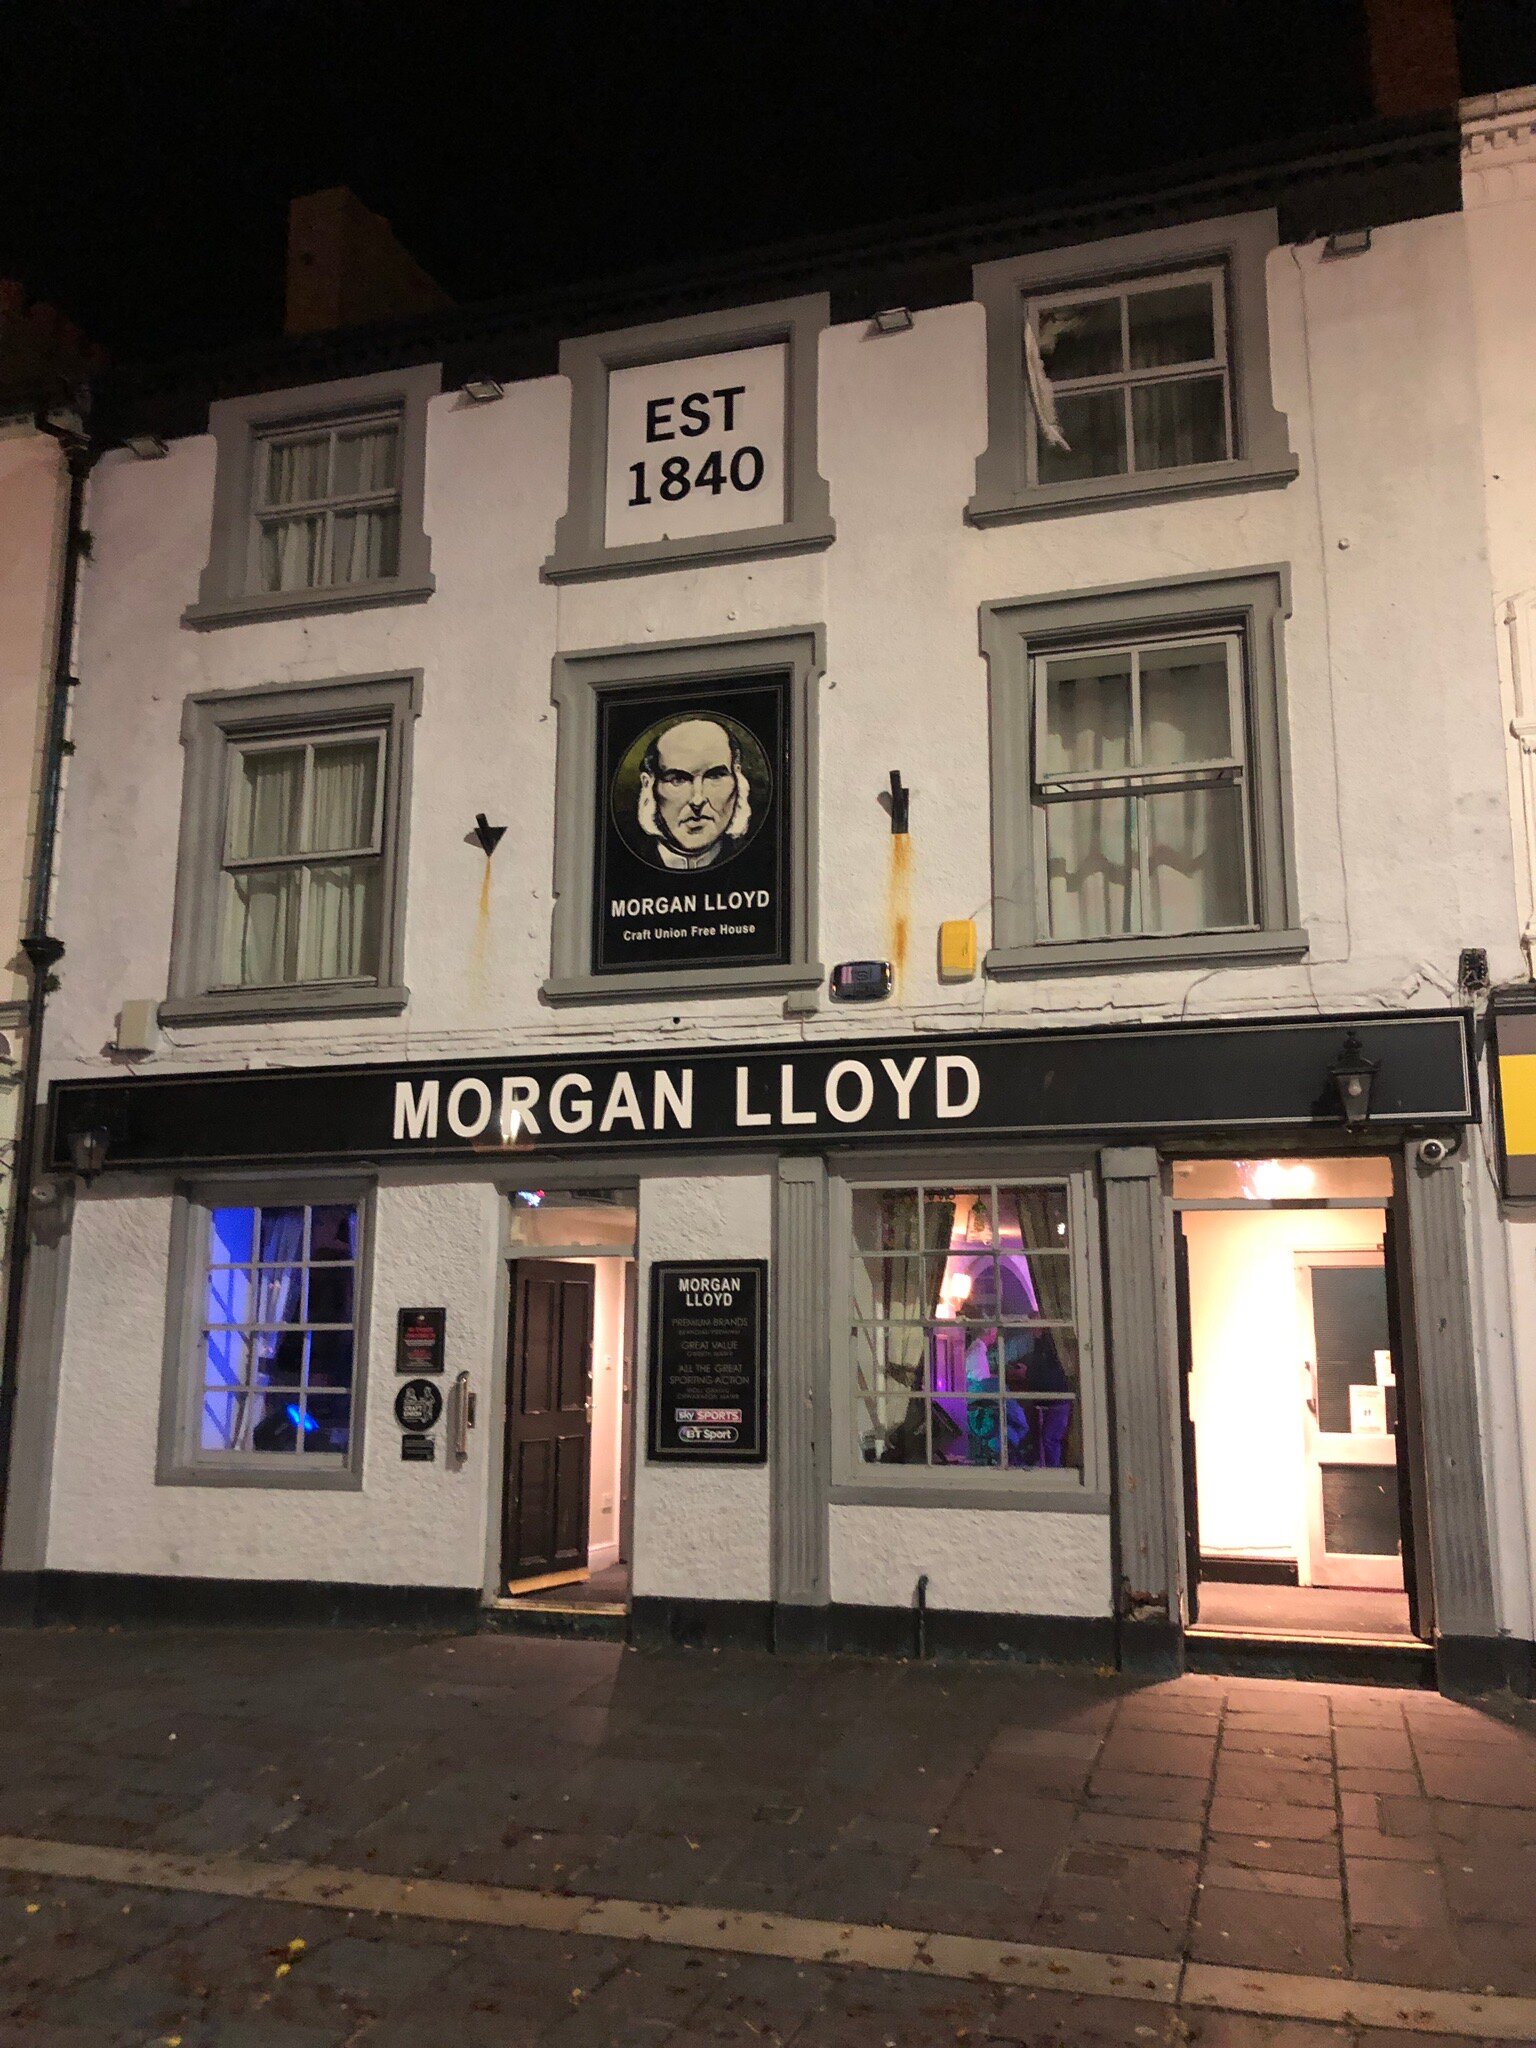 The Morgan Lloyd